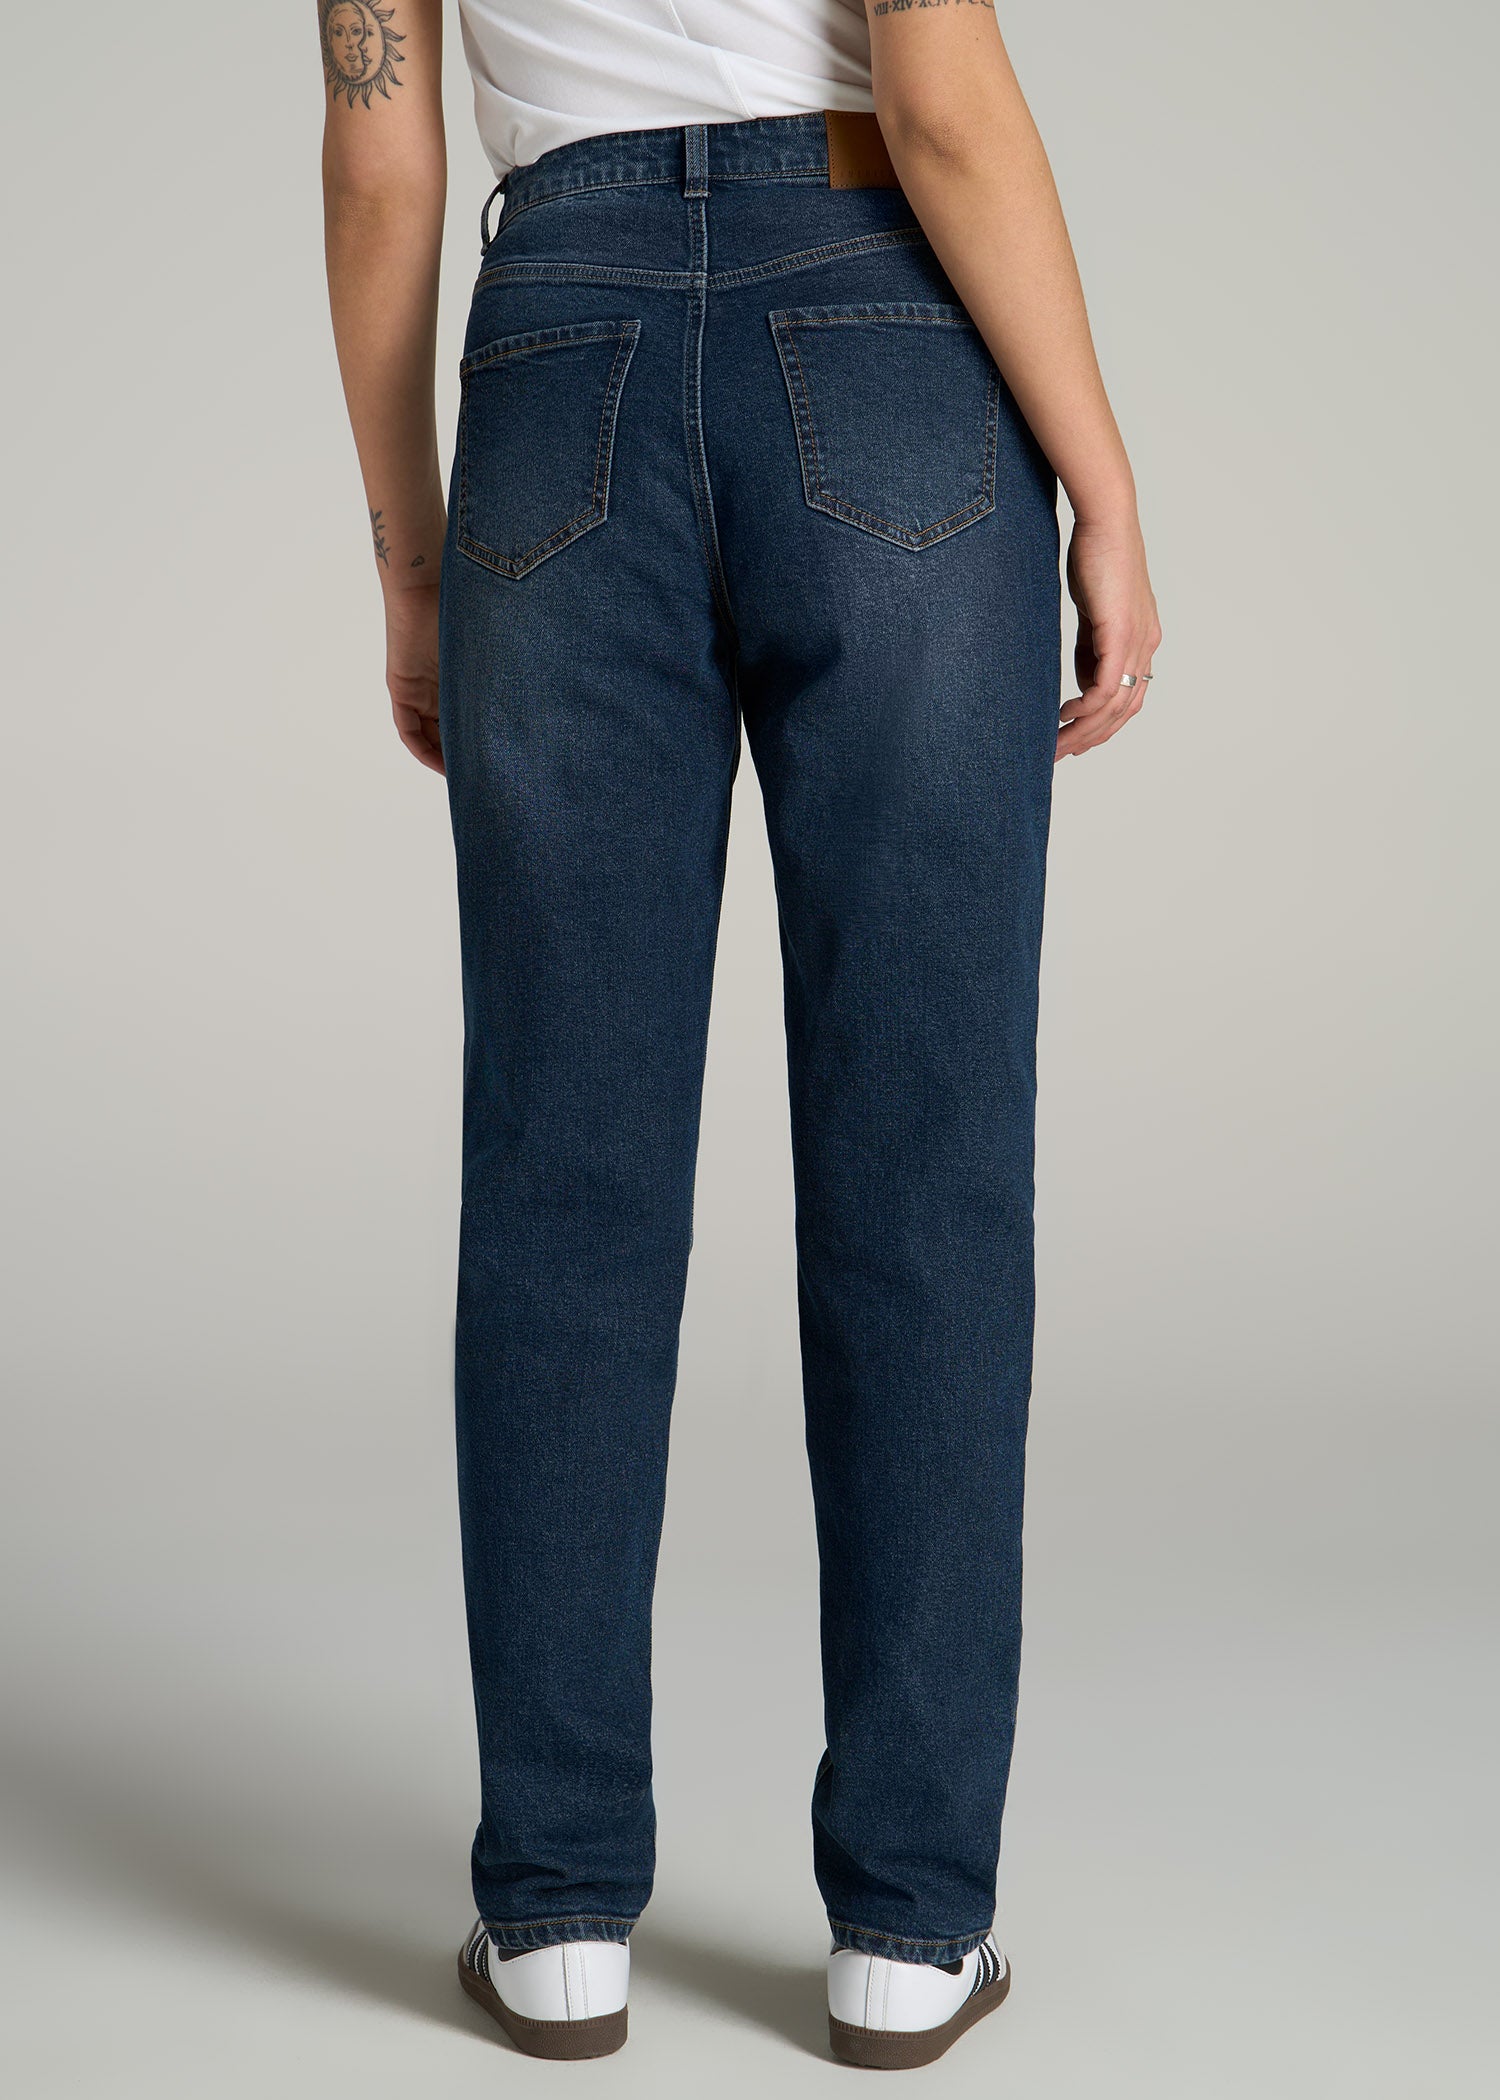 Vintage Gap Women's Boy Fit Jeans Button Fly Medium Wash Size 16 Long